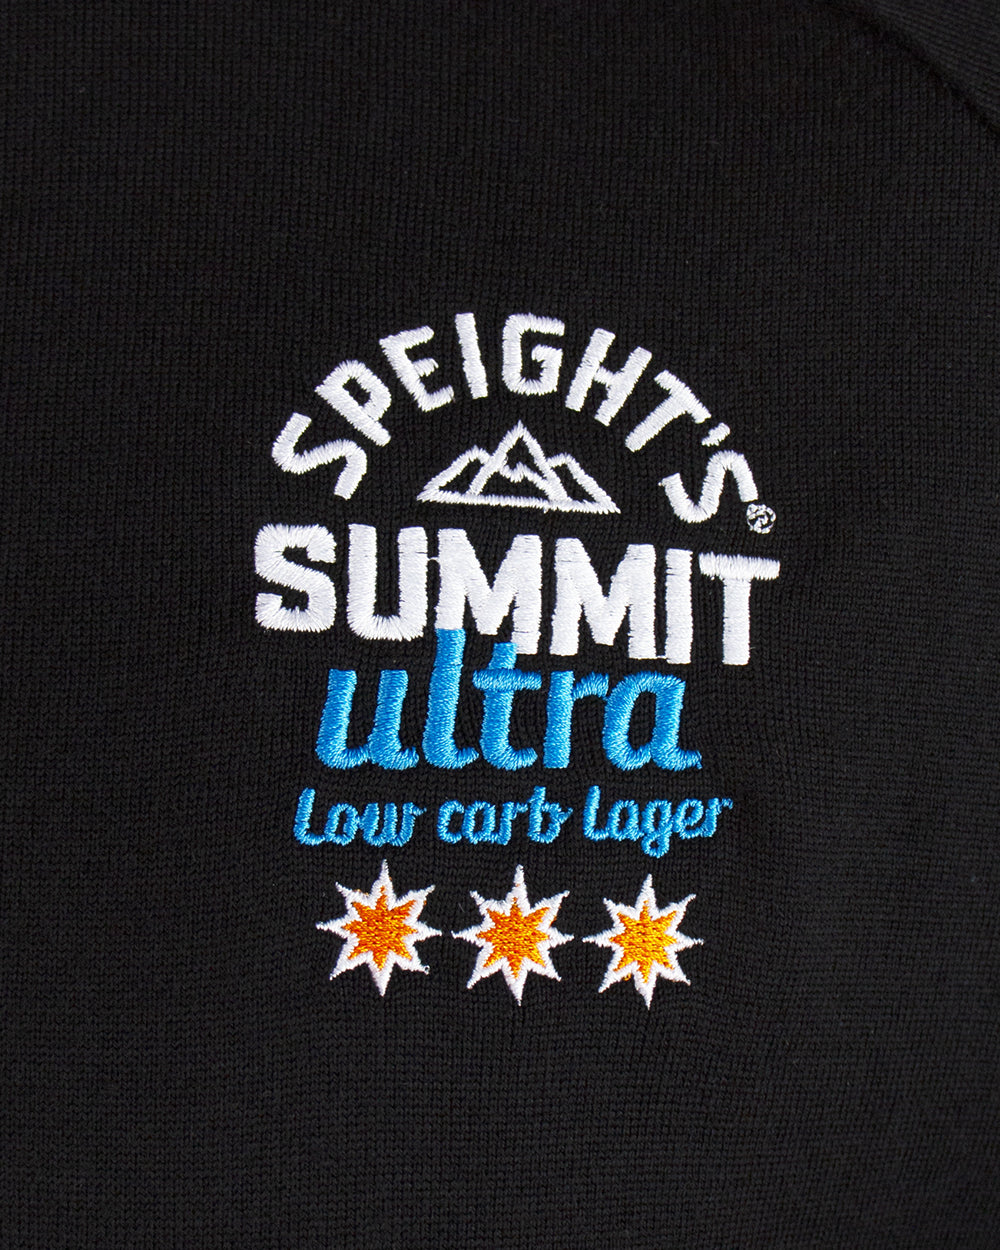 Speight's Summit ULTRA 1/4 Zip Merino -  Beer Gear Apparel & Merchandise - Speights - Lion Red - VB - Tokyo Dy merch